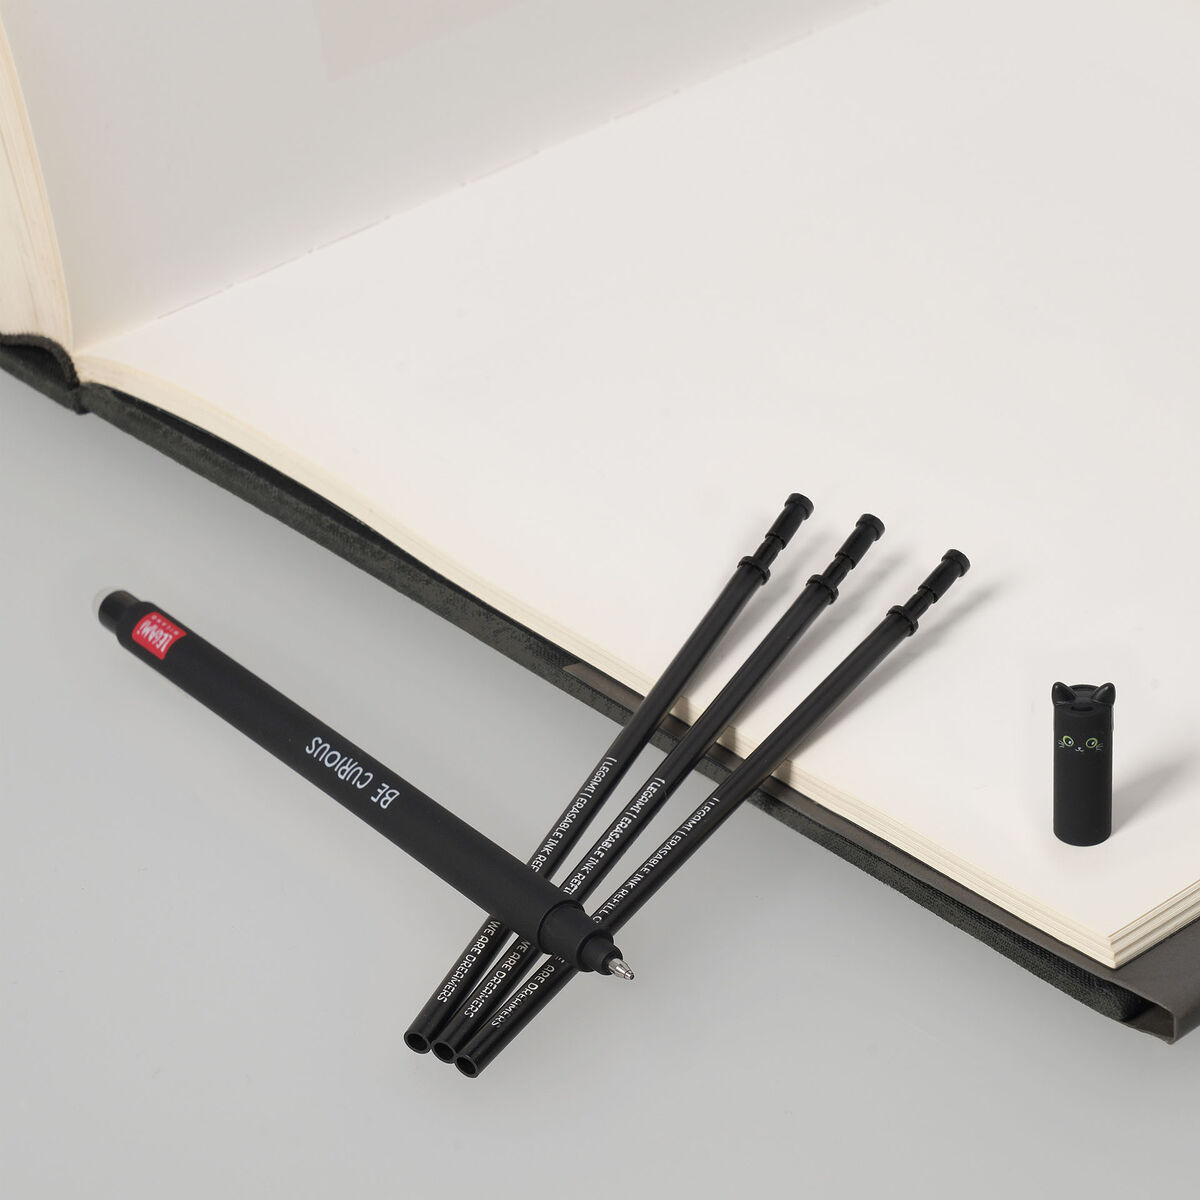 Kitty Erasable Pen Set with Black Refill, , zoo